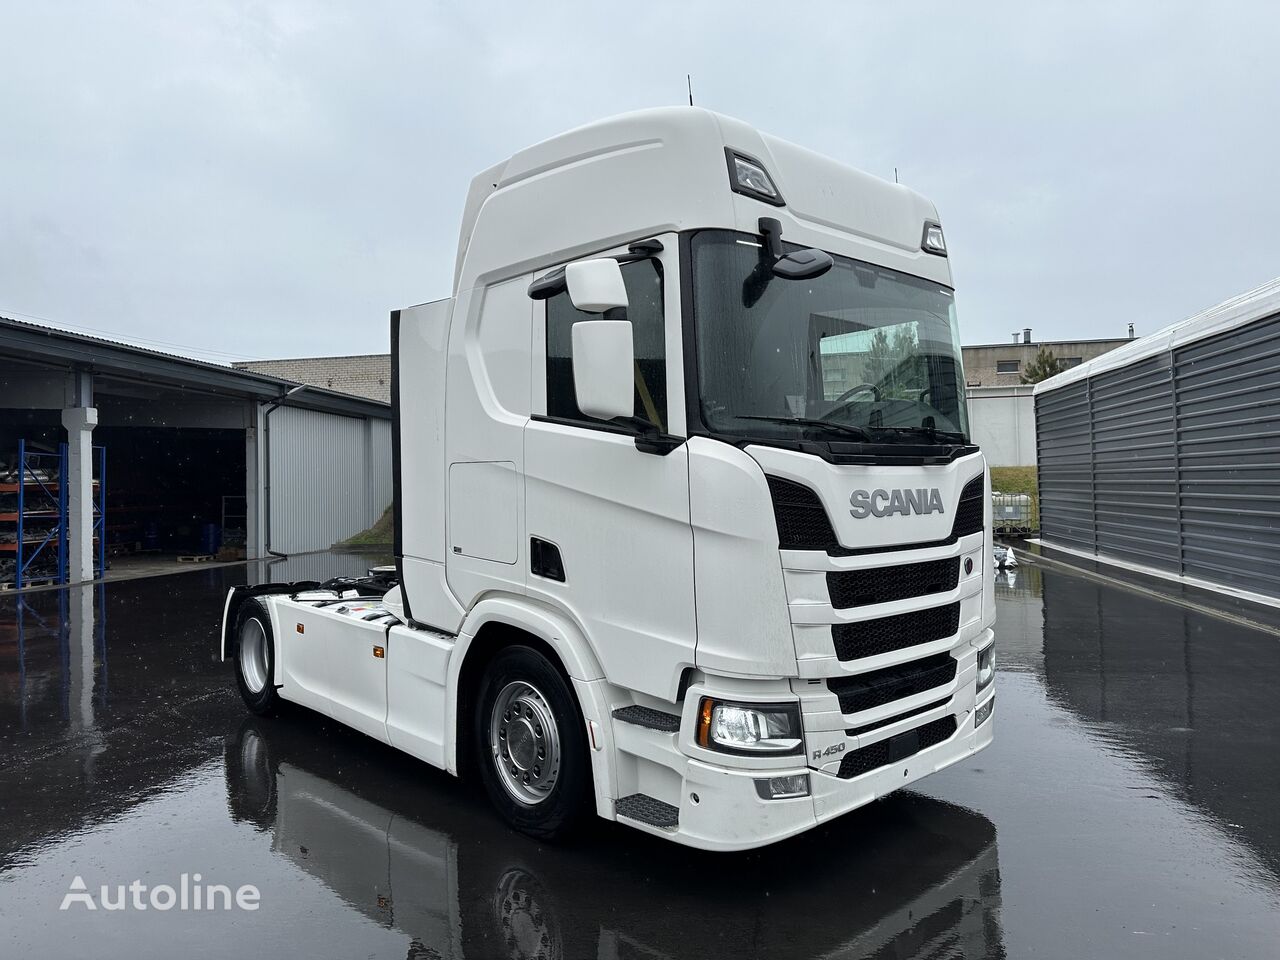 kabina Scania 2018 R450 EURO 6 vilkikas ardomas dalimis vilkiko Scania